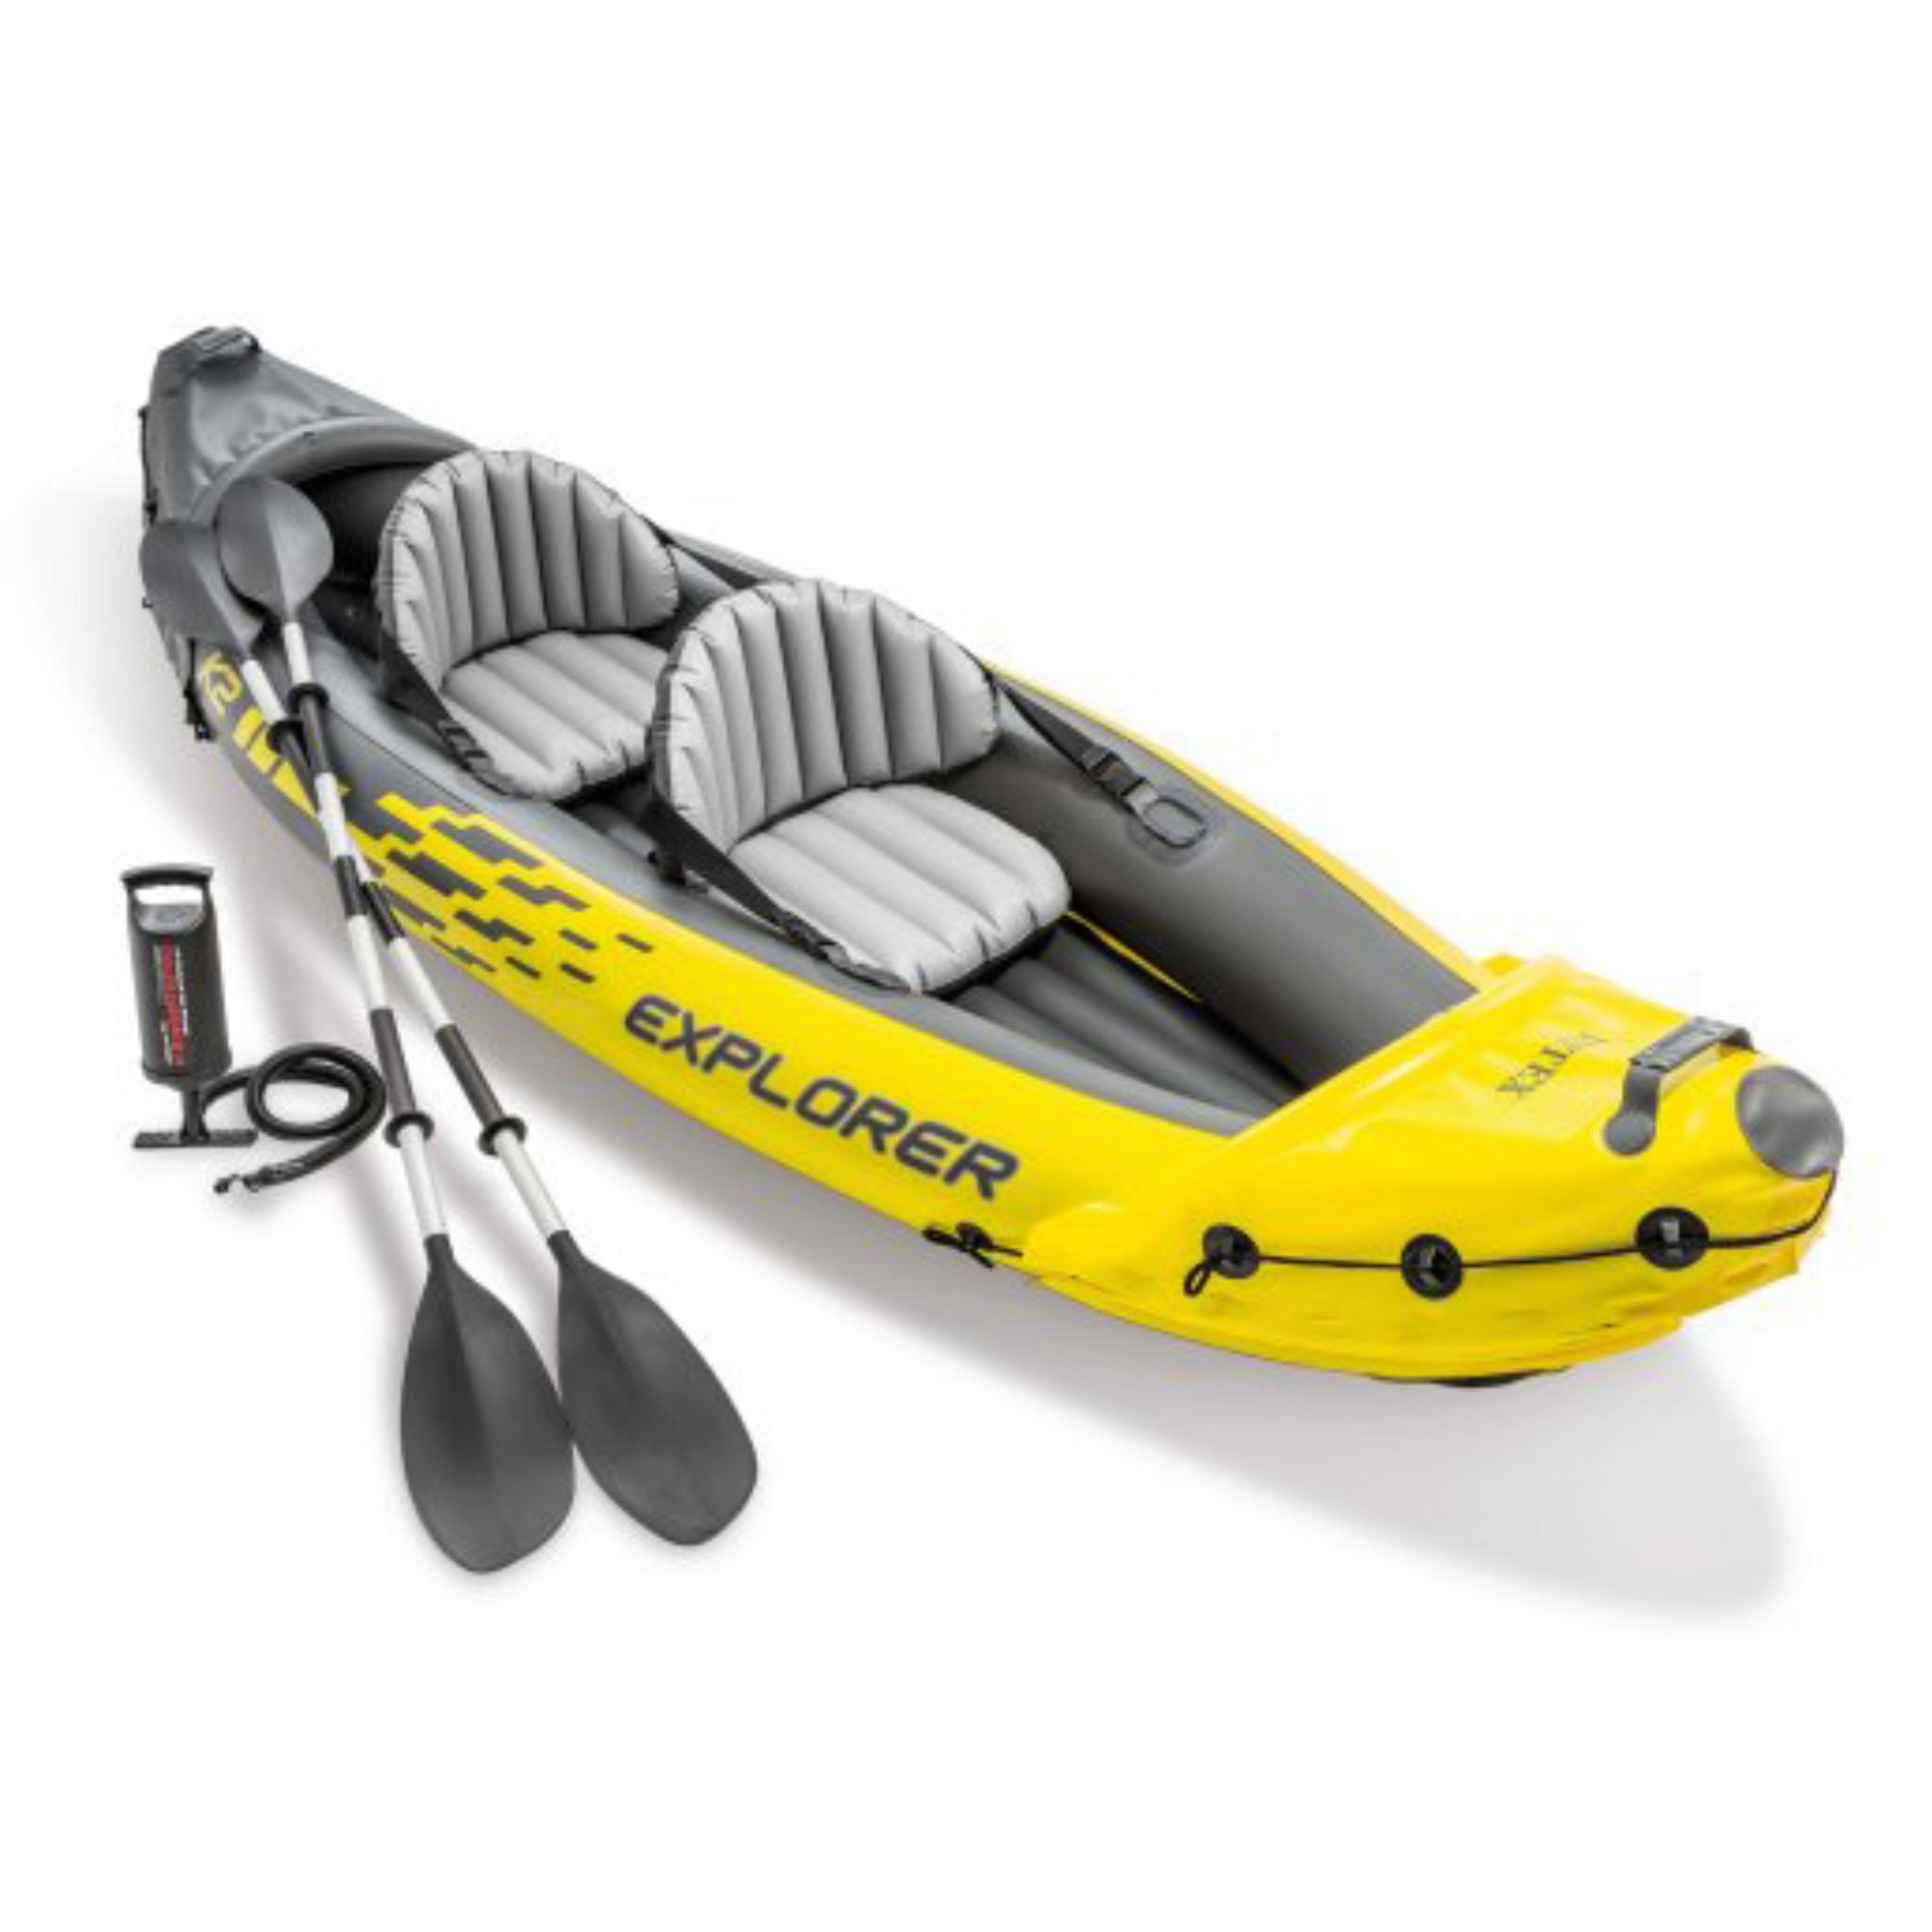 Person Inflatable Kayak